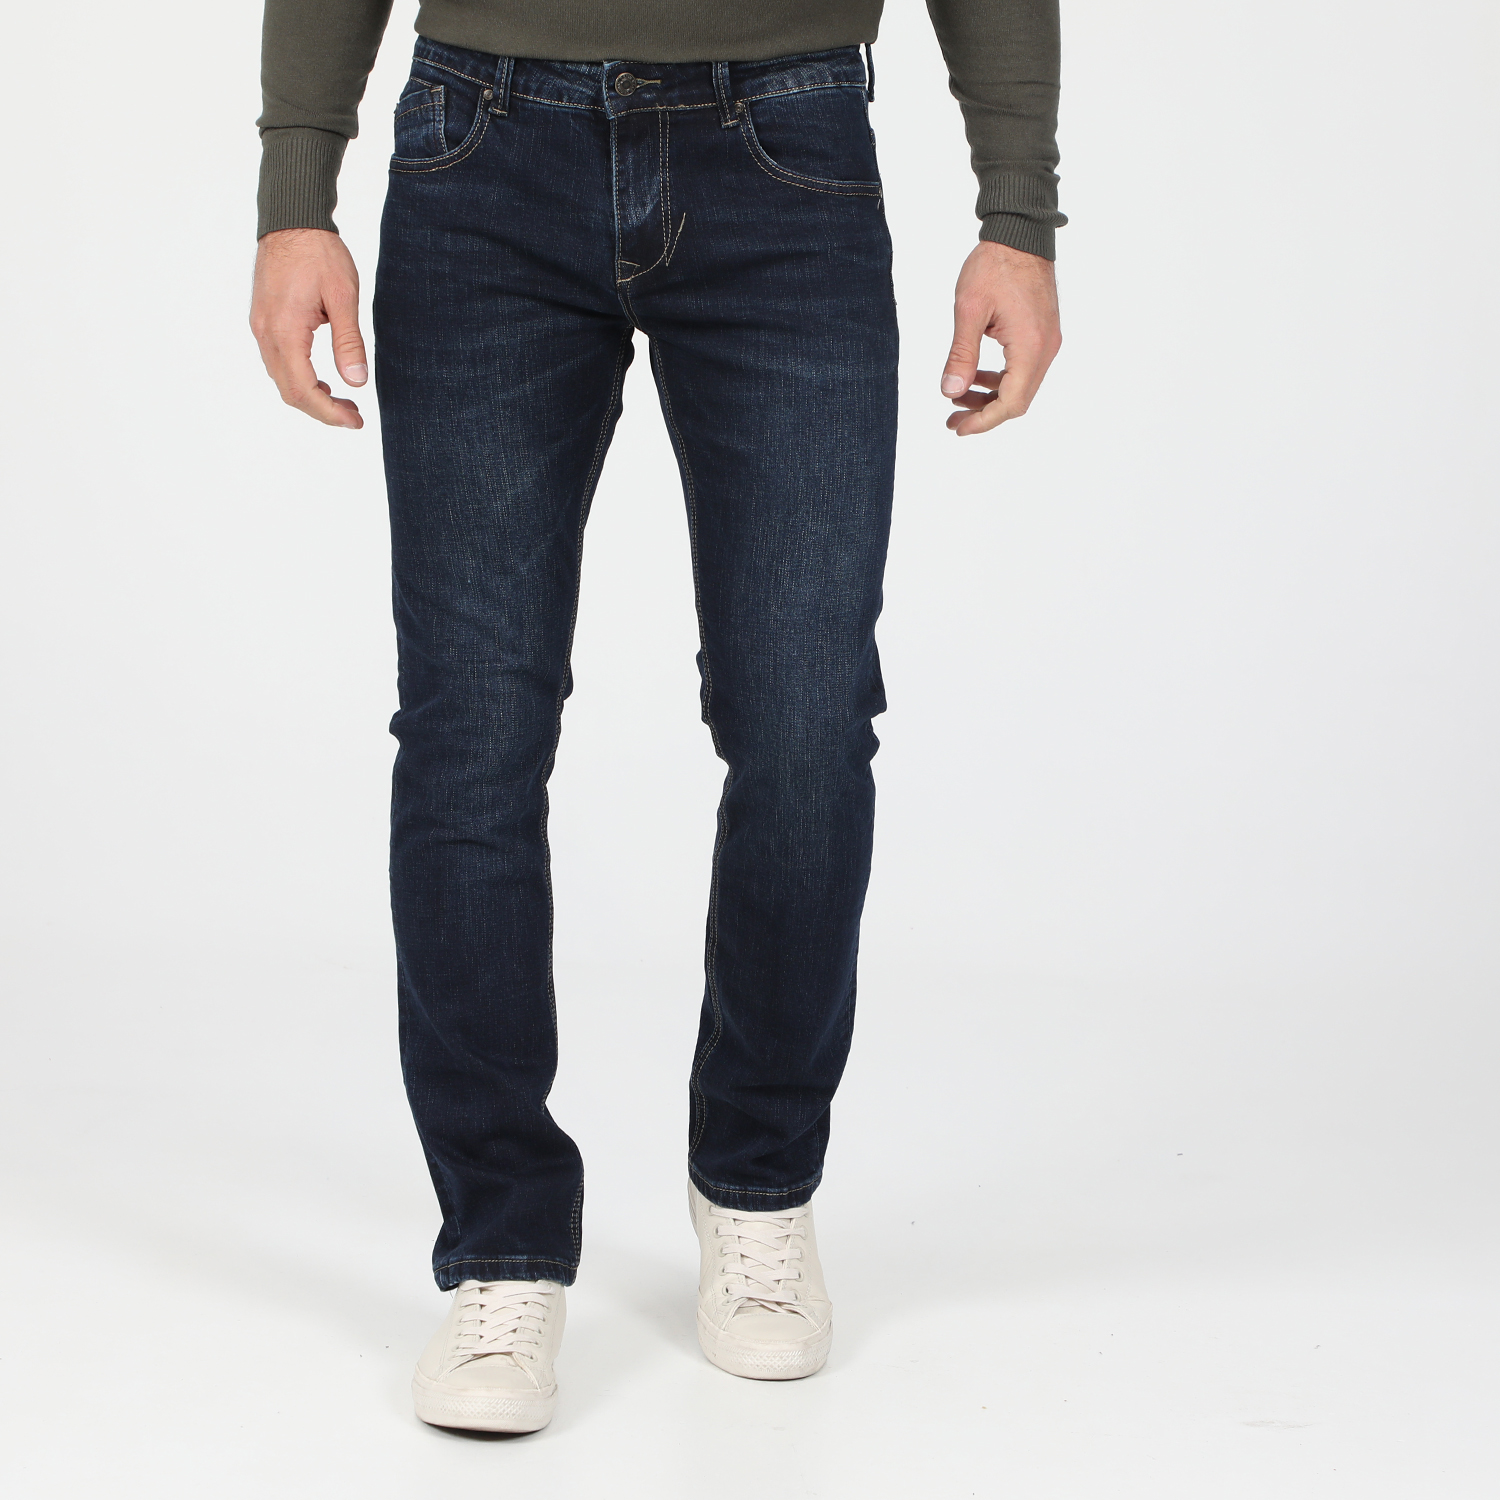 MARTIN & CO - Ανδρικό jean παντελόνι MARTIN & CO μπλε